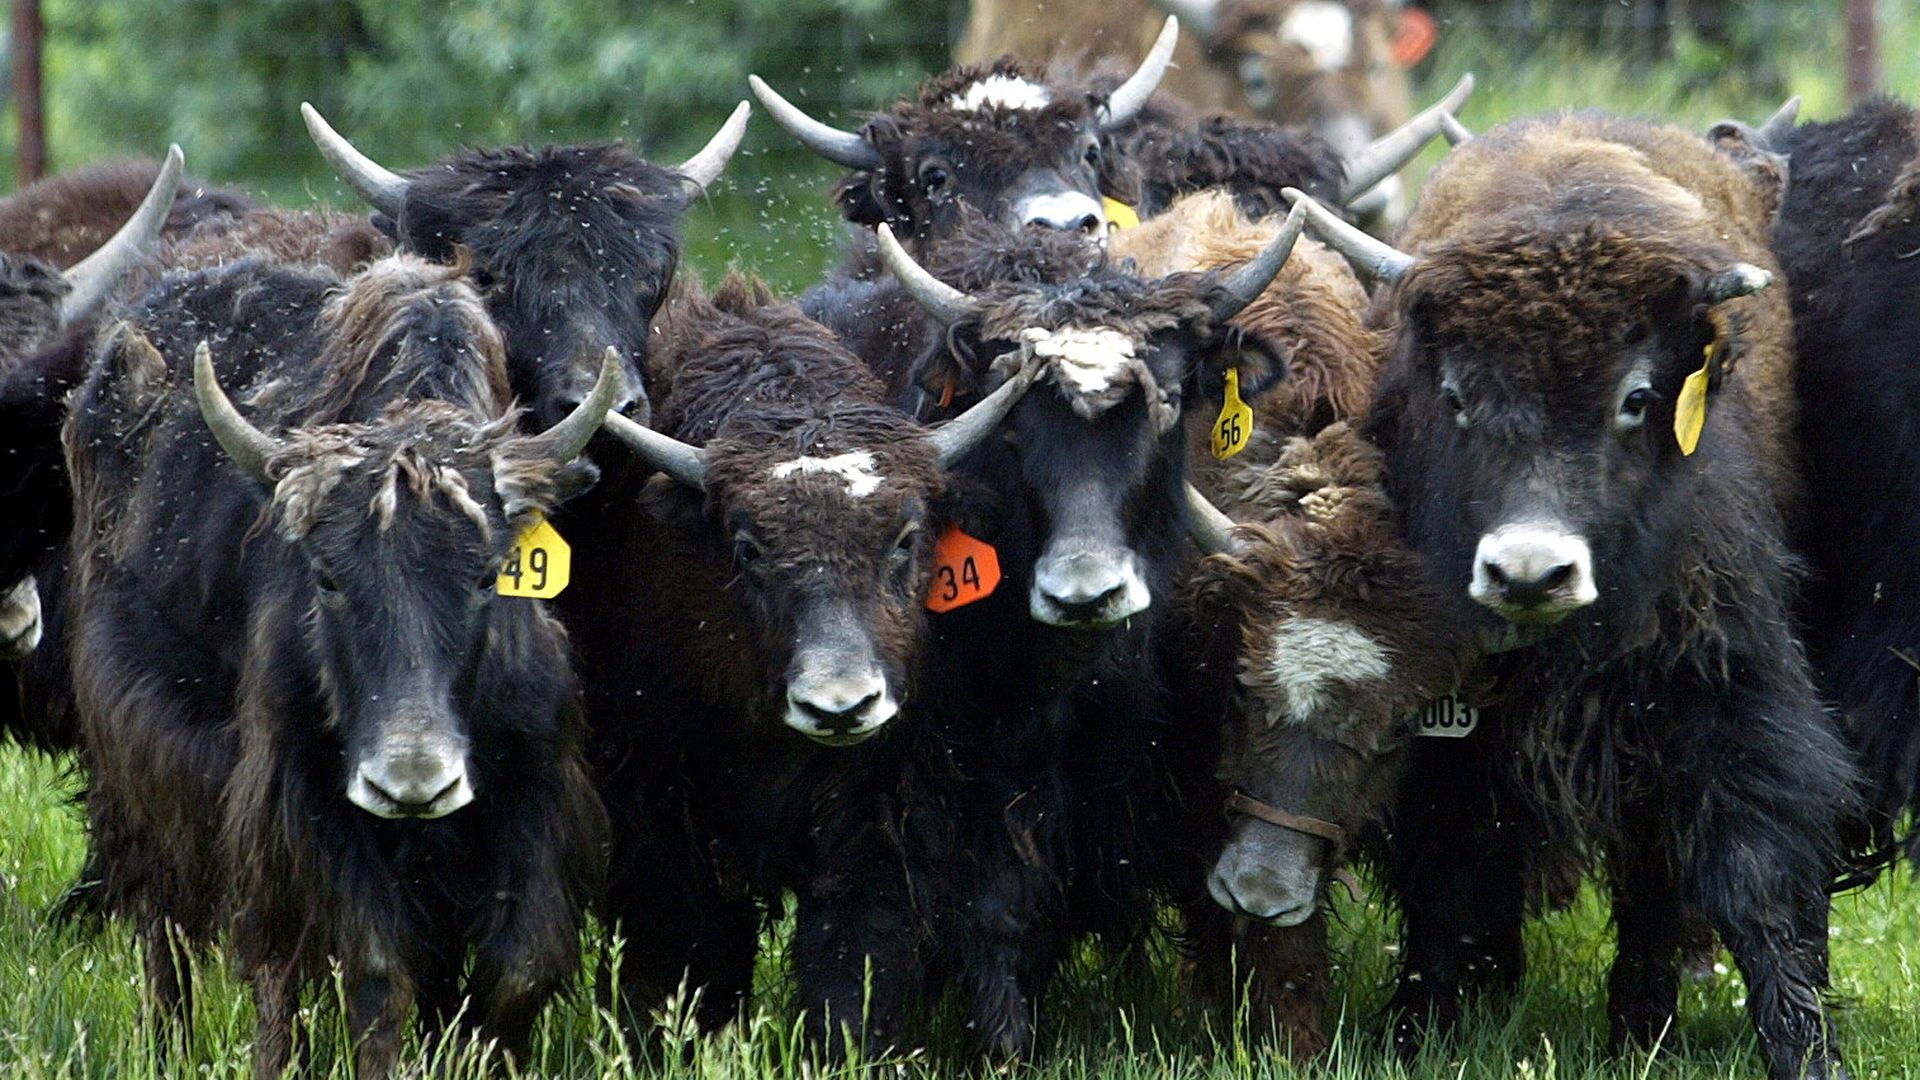 A herd of yaks